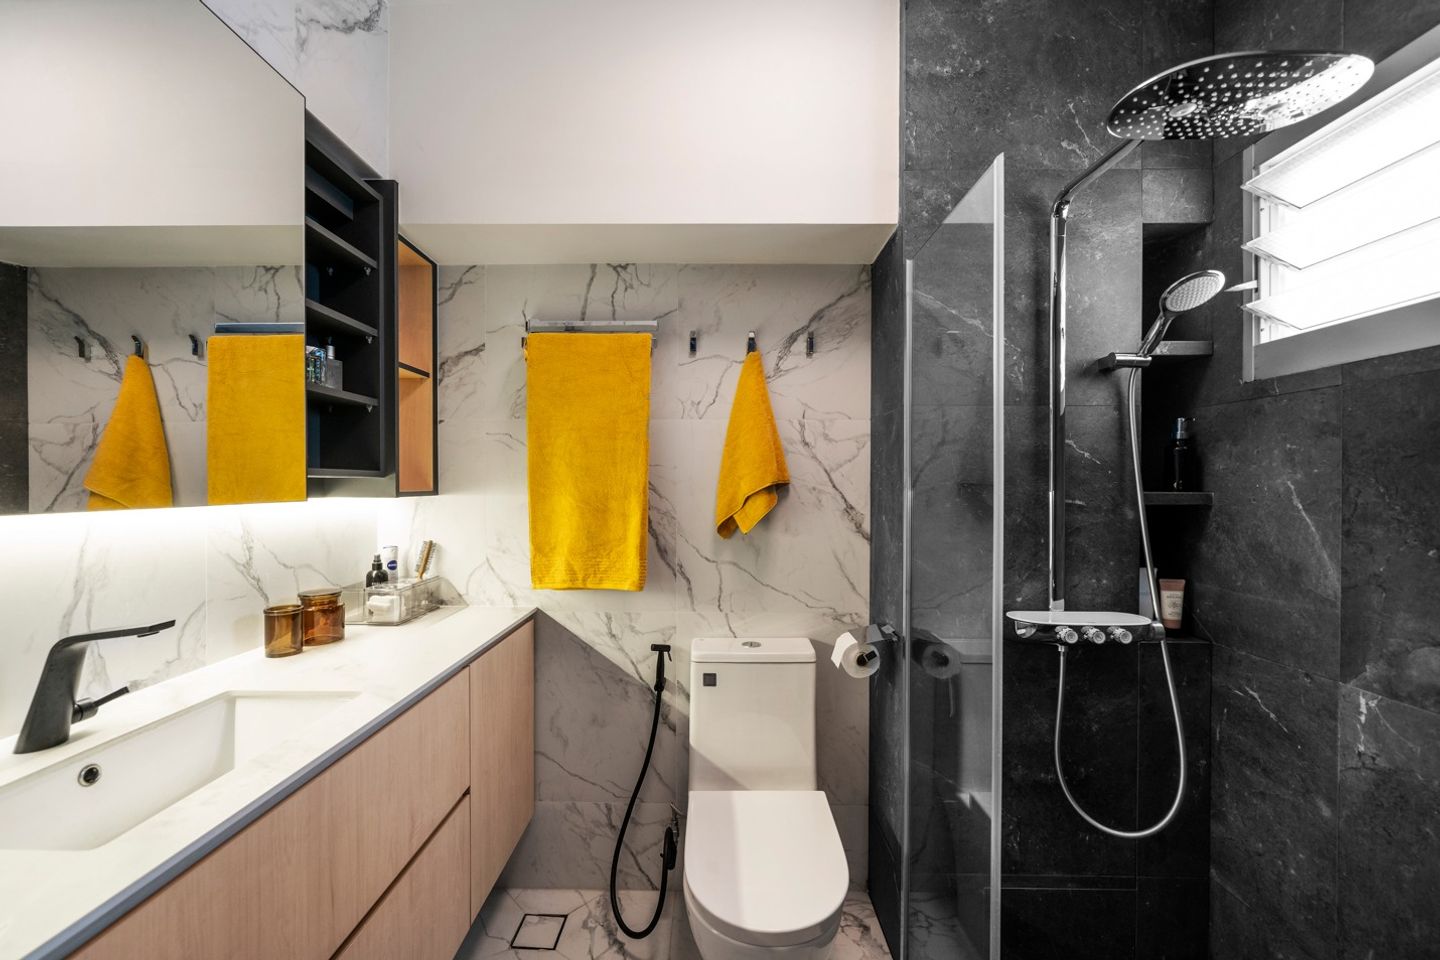 Bathroom Tiles Design In White And Grey - Livspace